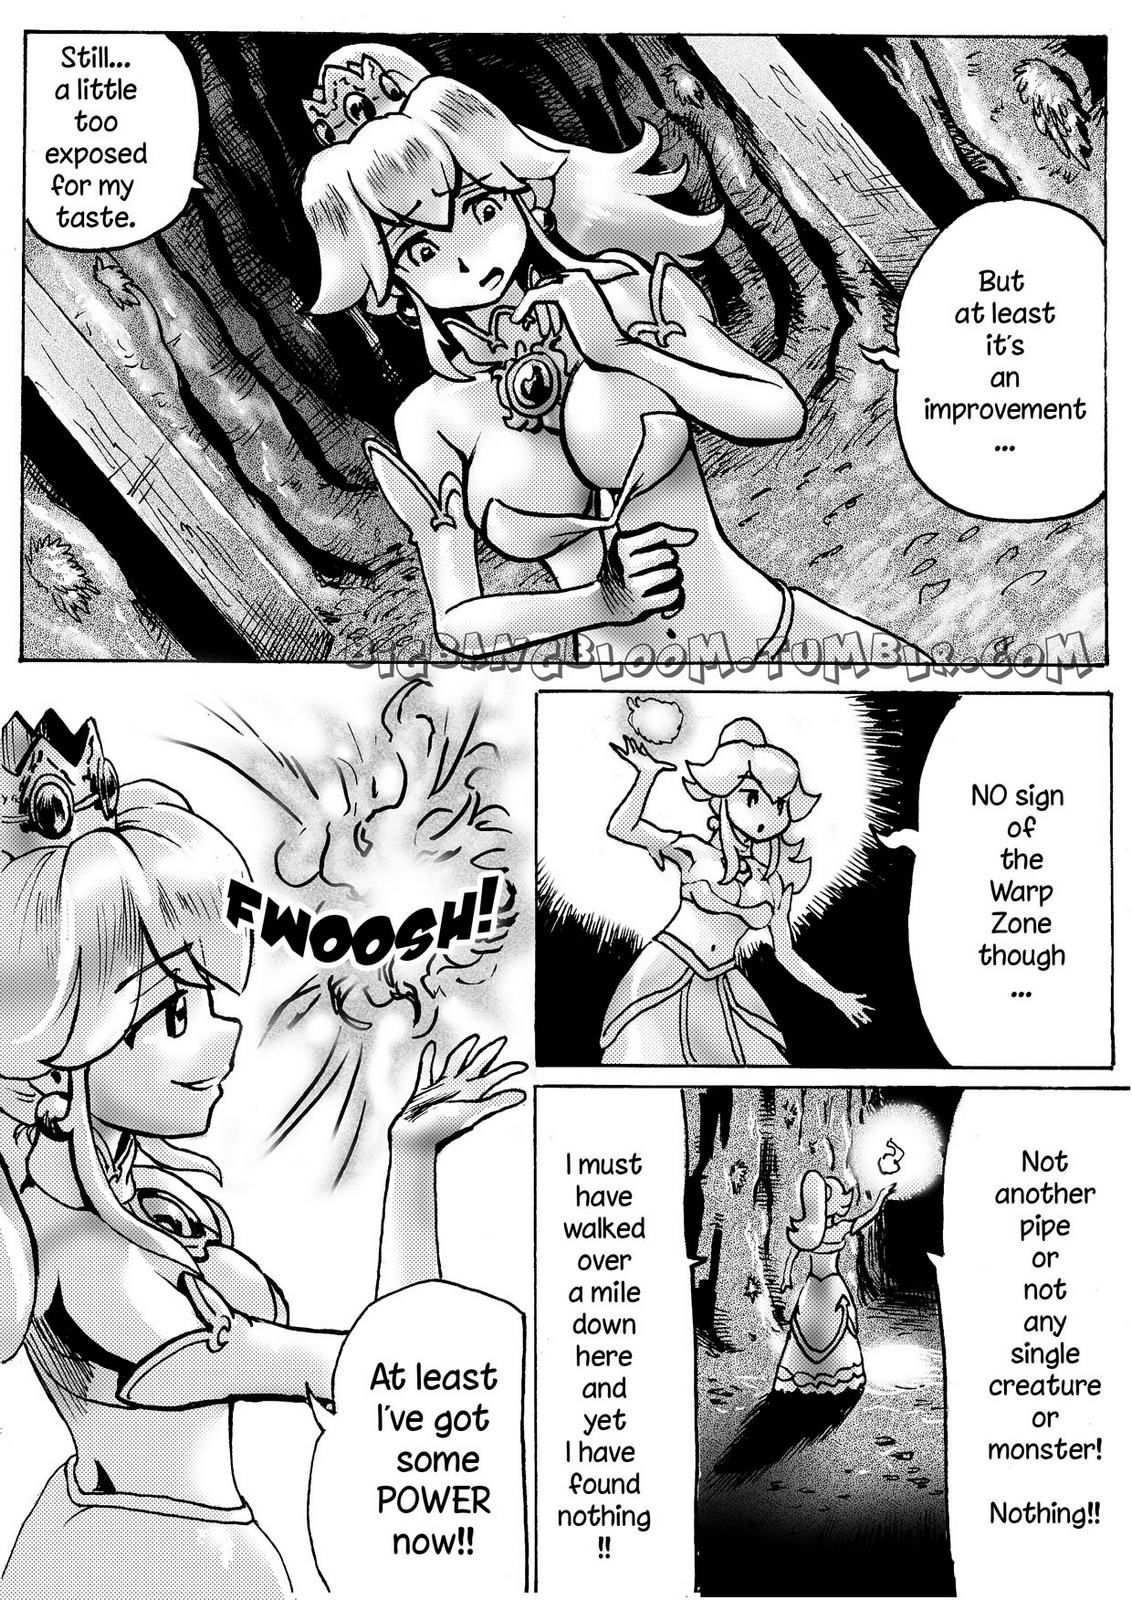 Super Wild Adventure 3 (Saikyo3B) page 3